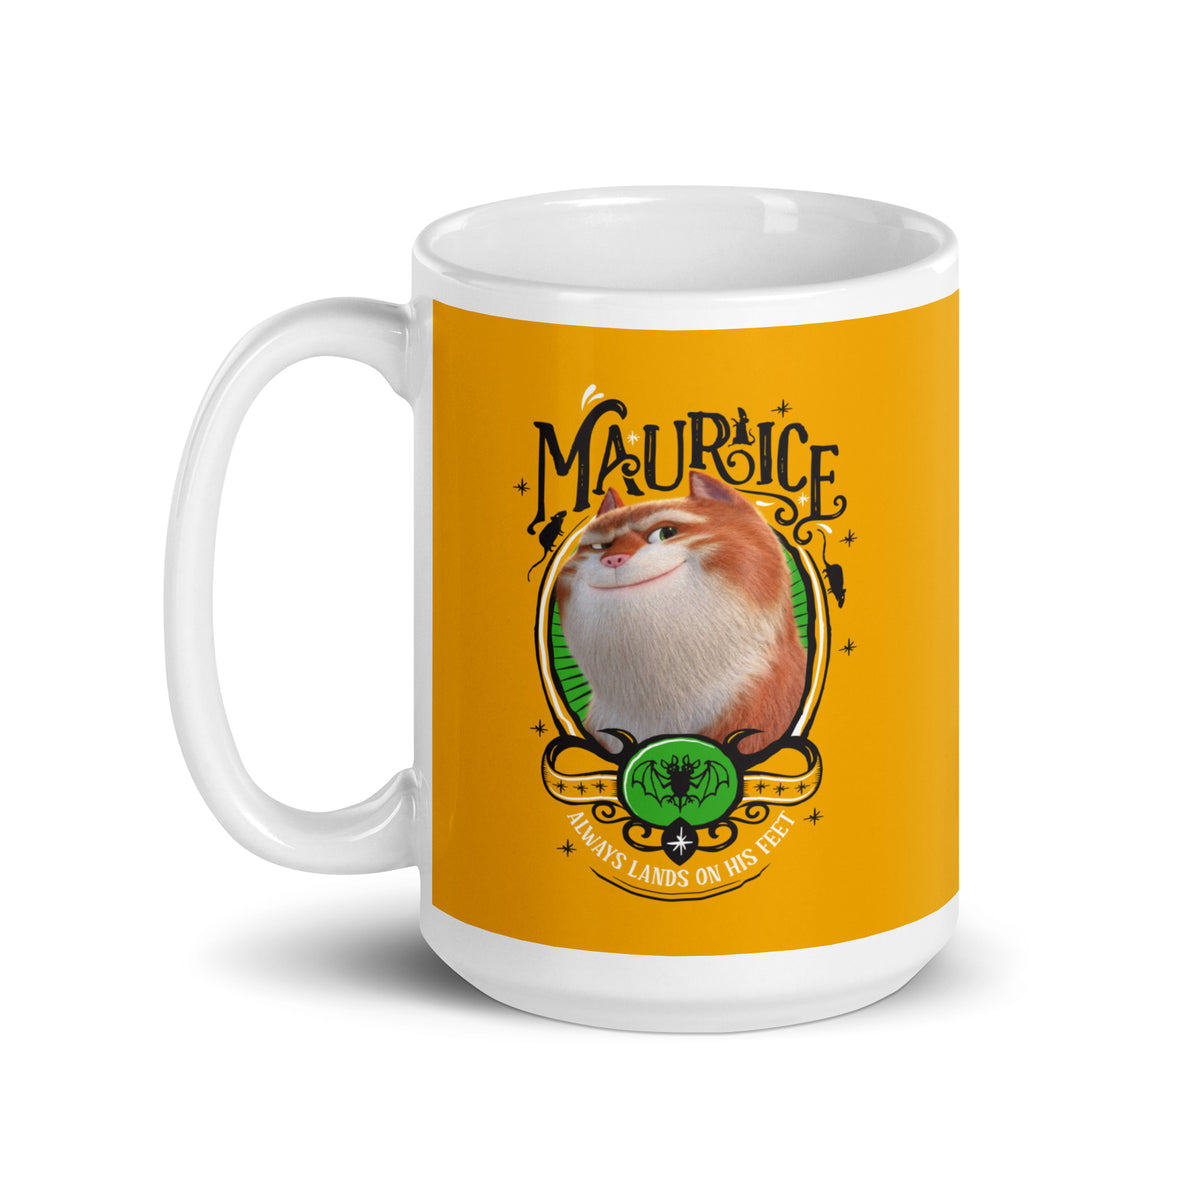 Maurice Always Lands On His Feet Glossy Mug